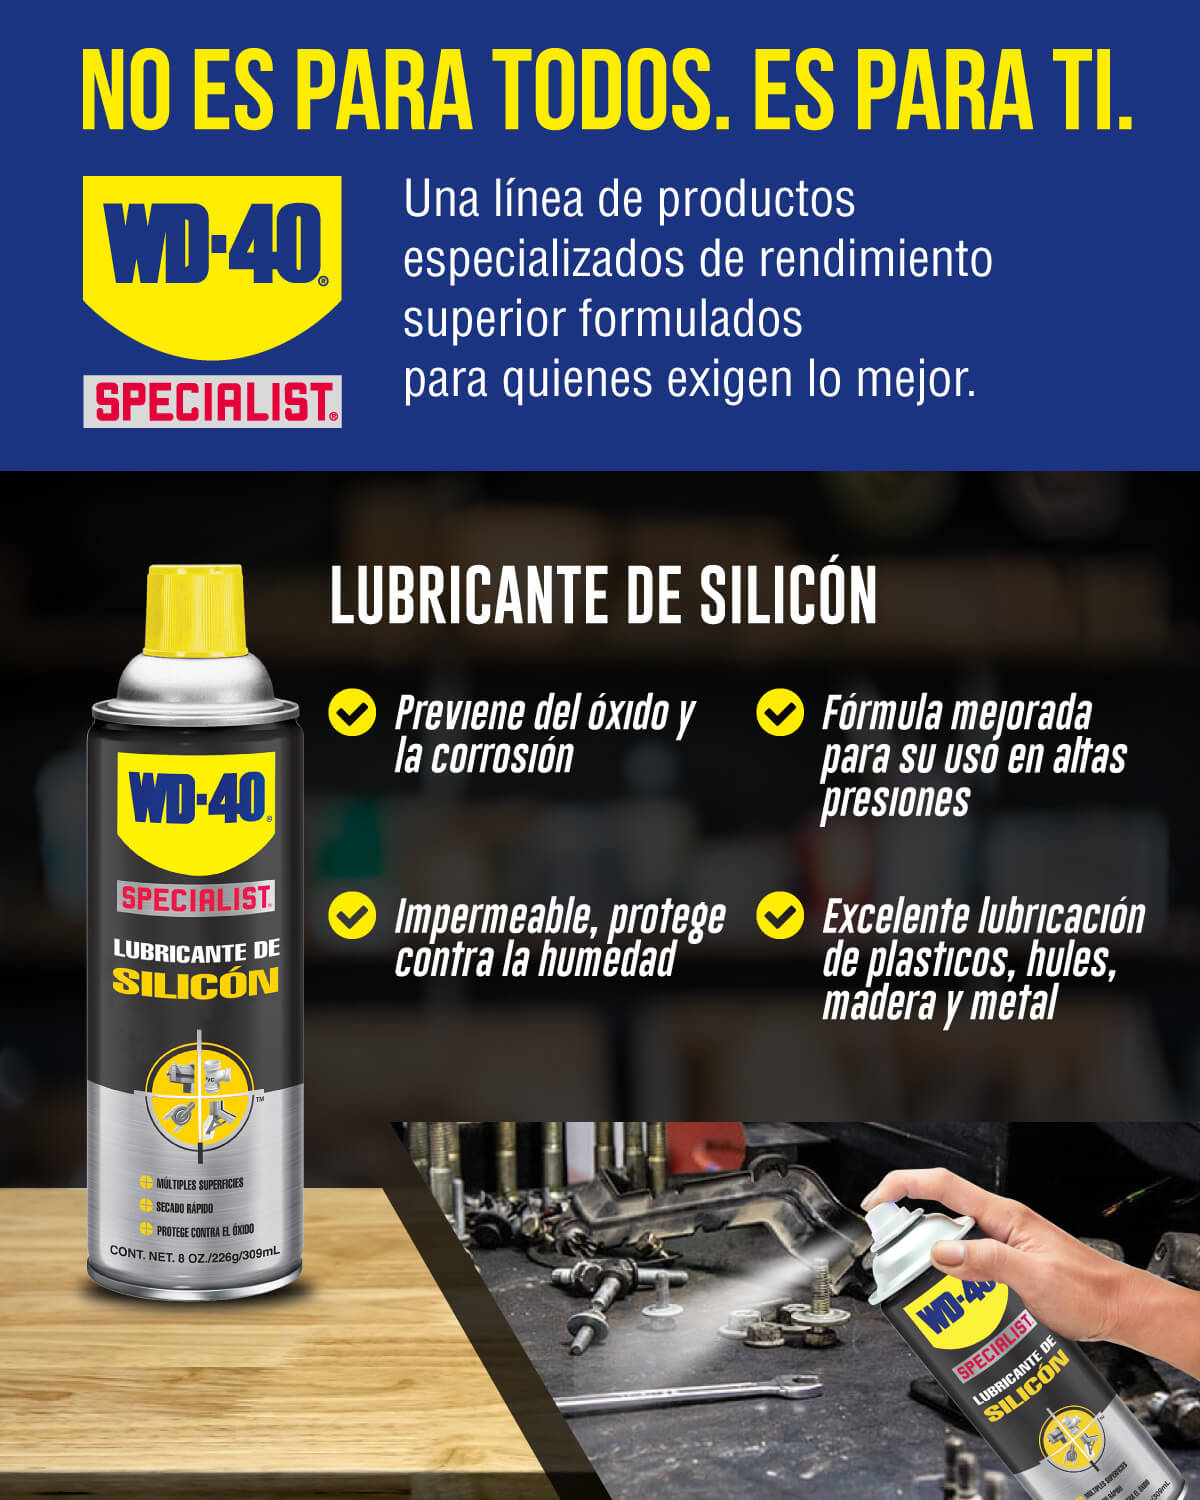 WD40 Specialist Specialist Lubricante silicon